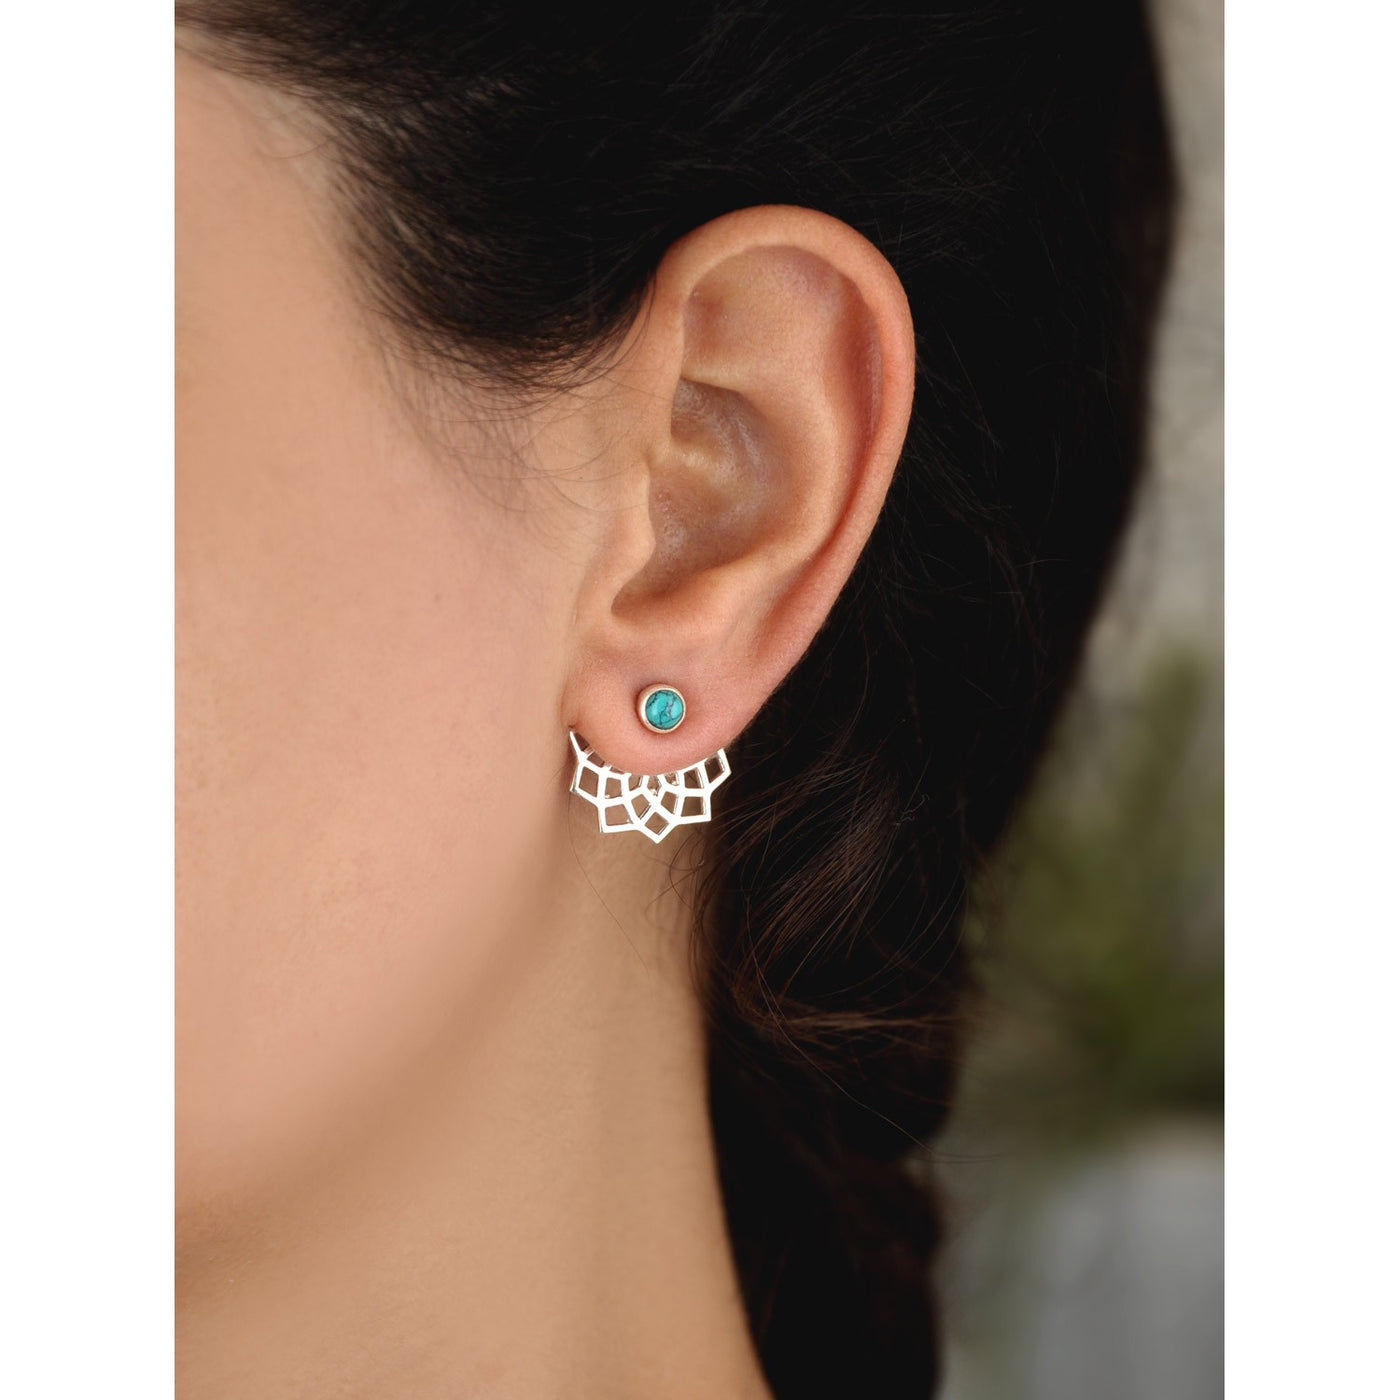 Geometric Silver Turquoise Earrings